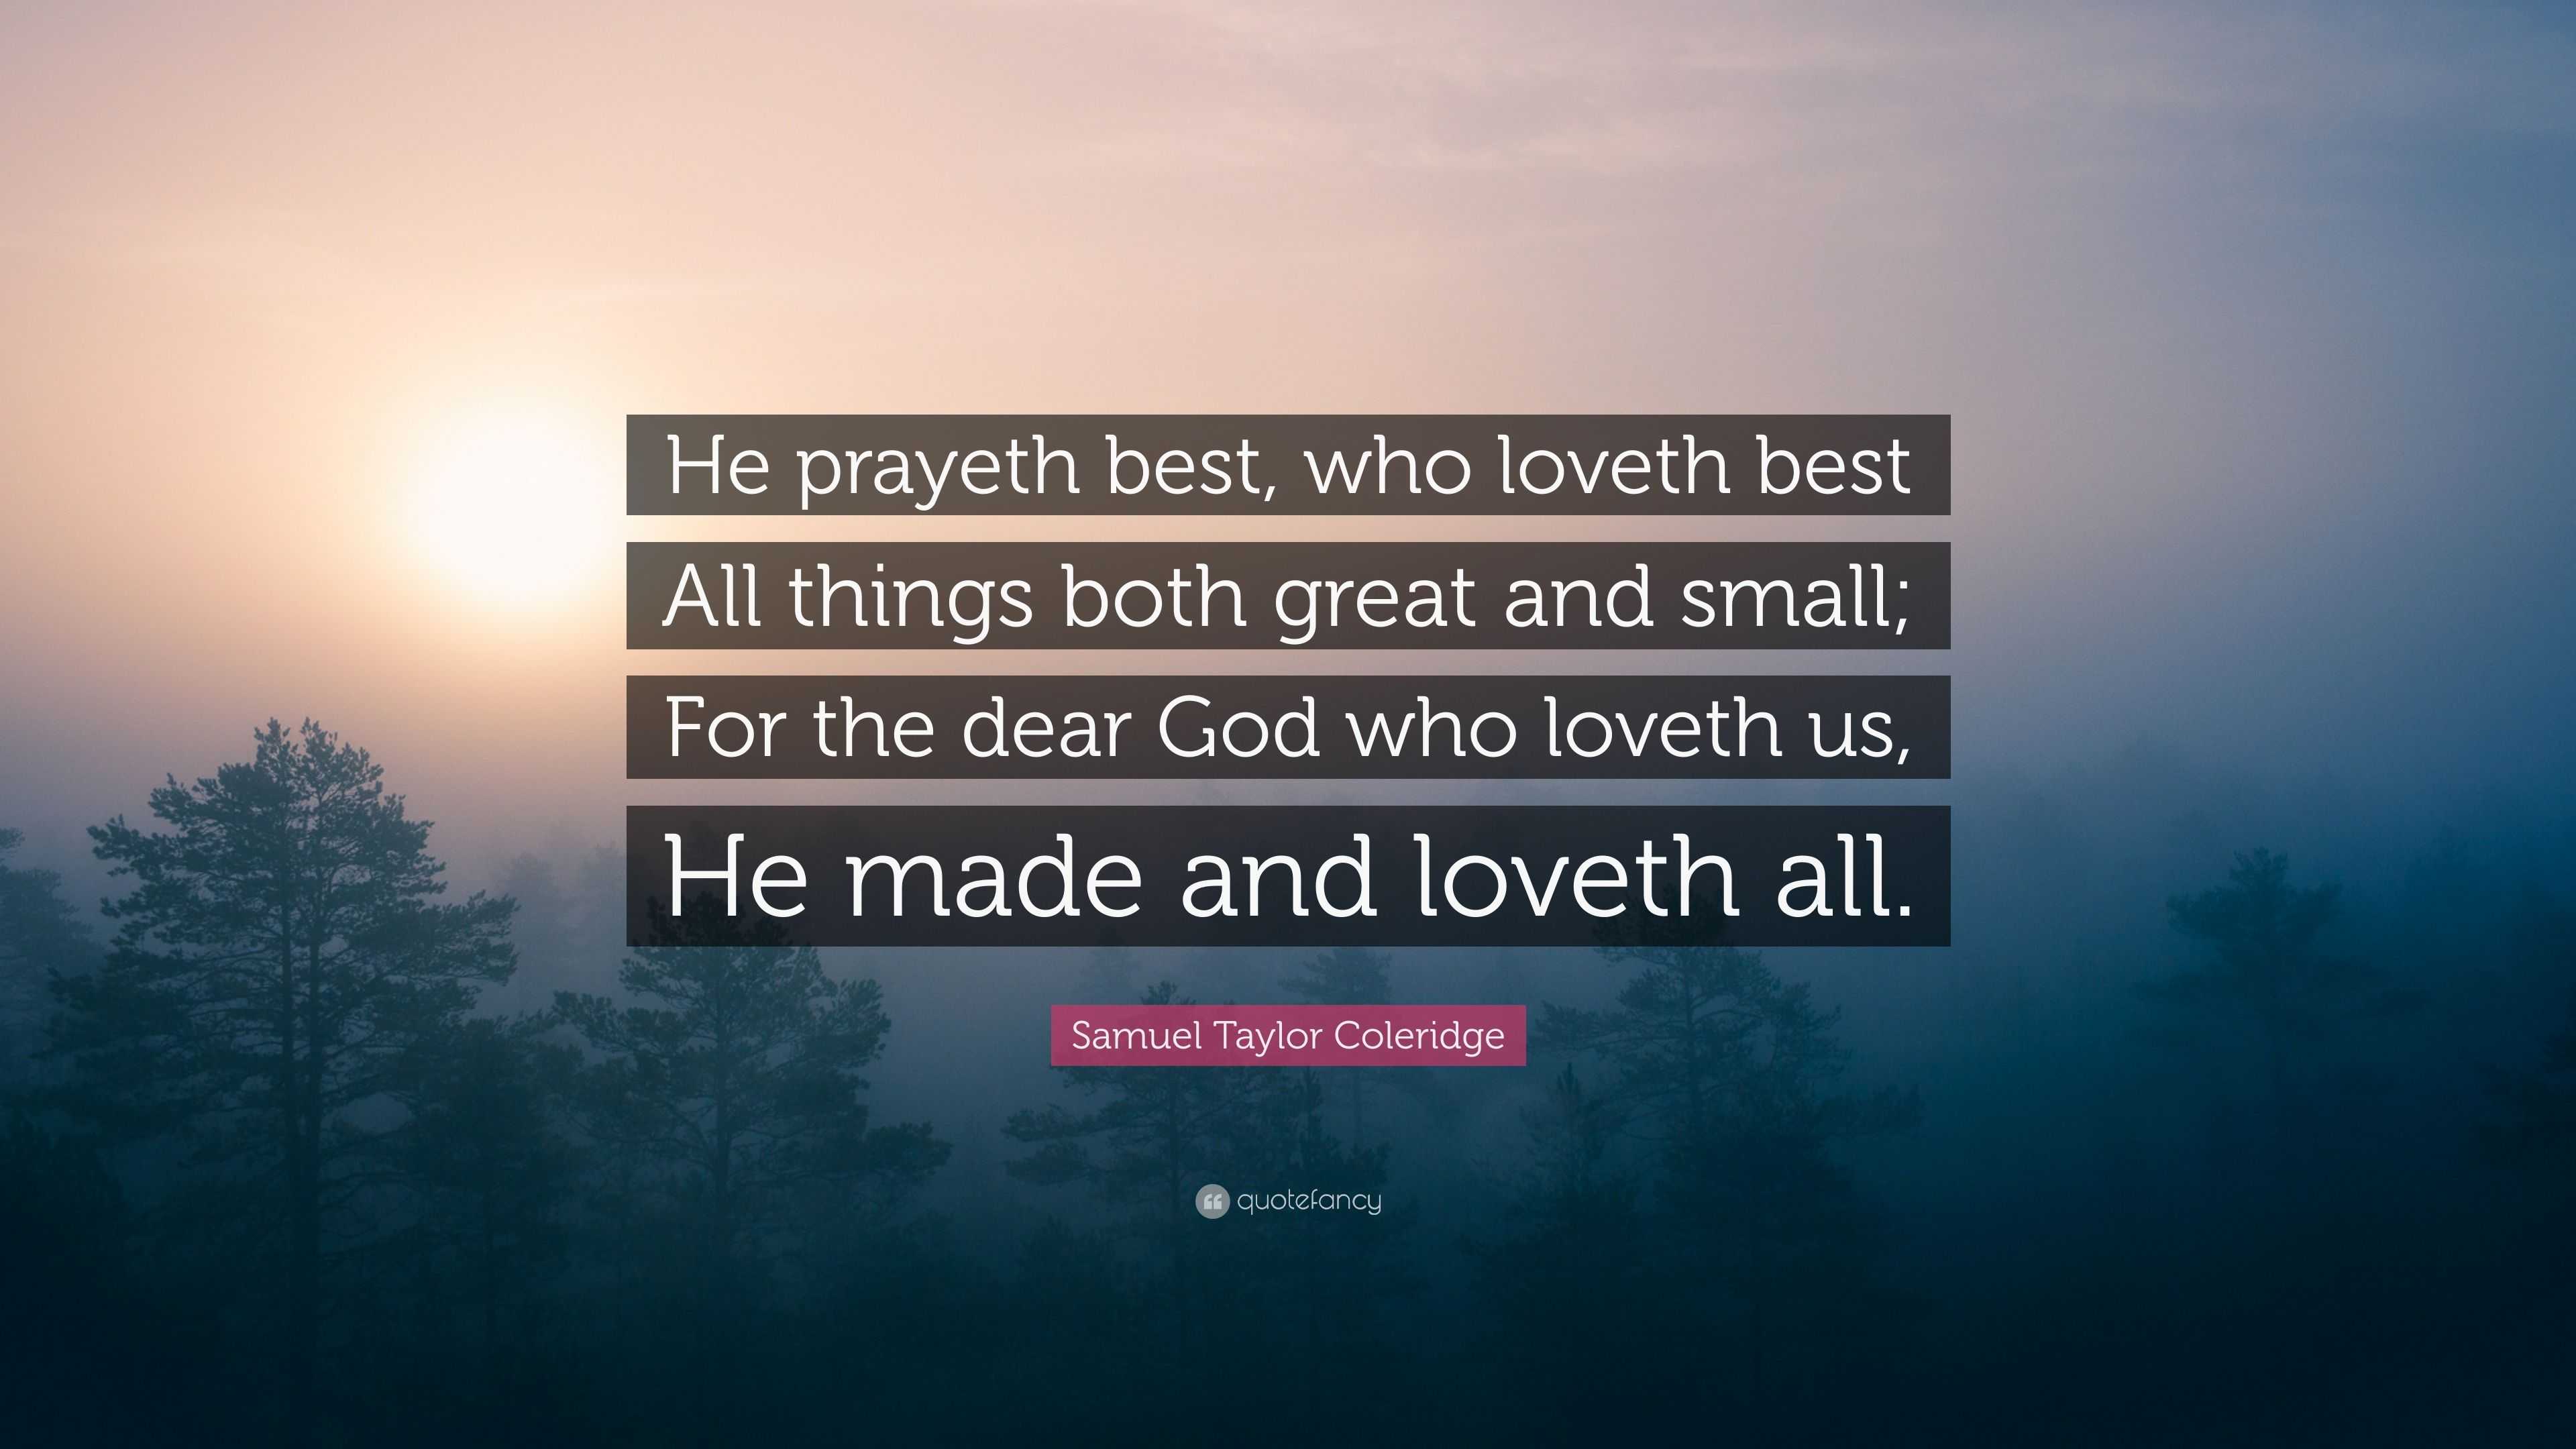 Samuel Taylor Coleridge Quote: “He prayeth best, who loveth best All things both ...3840 x 2160